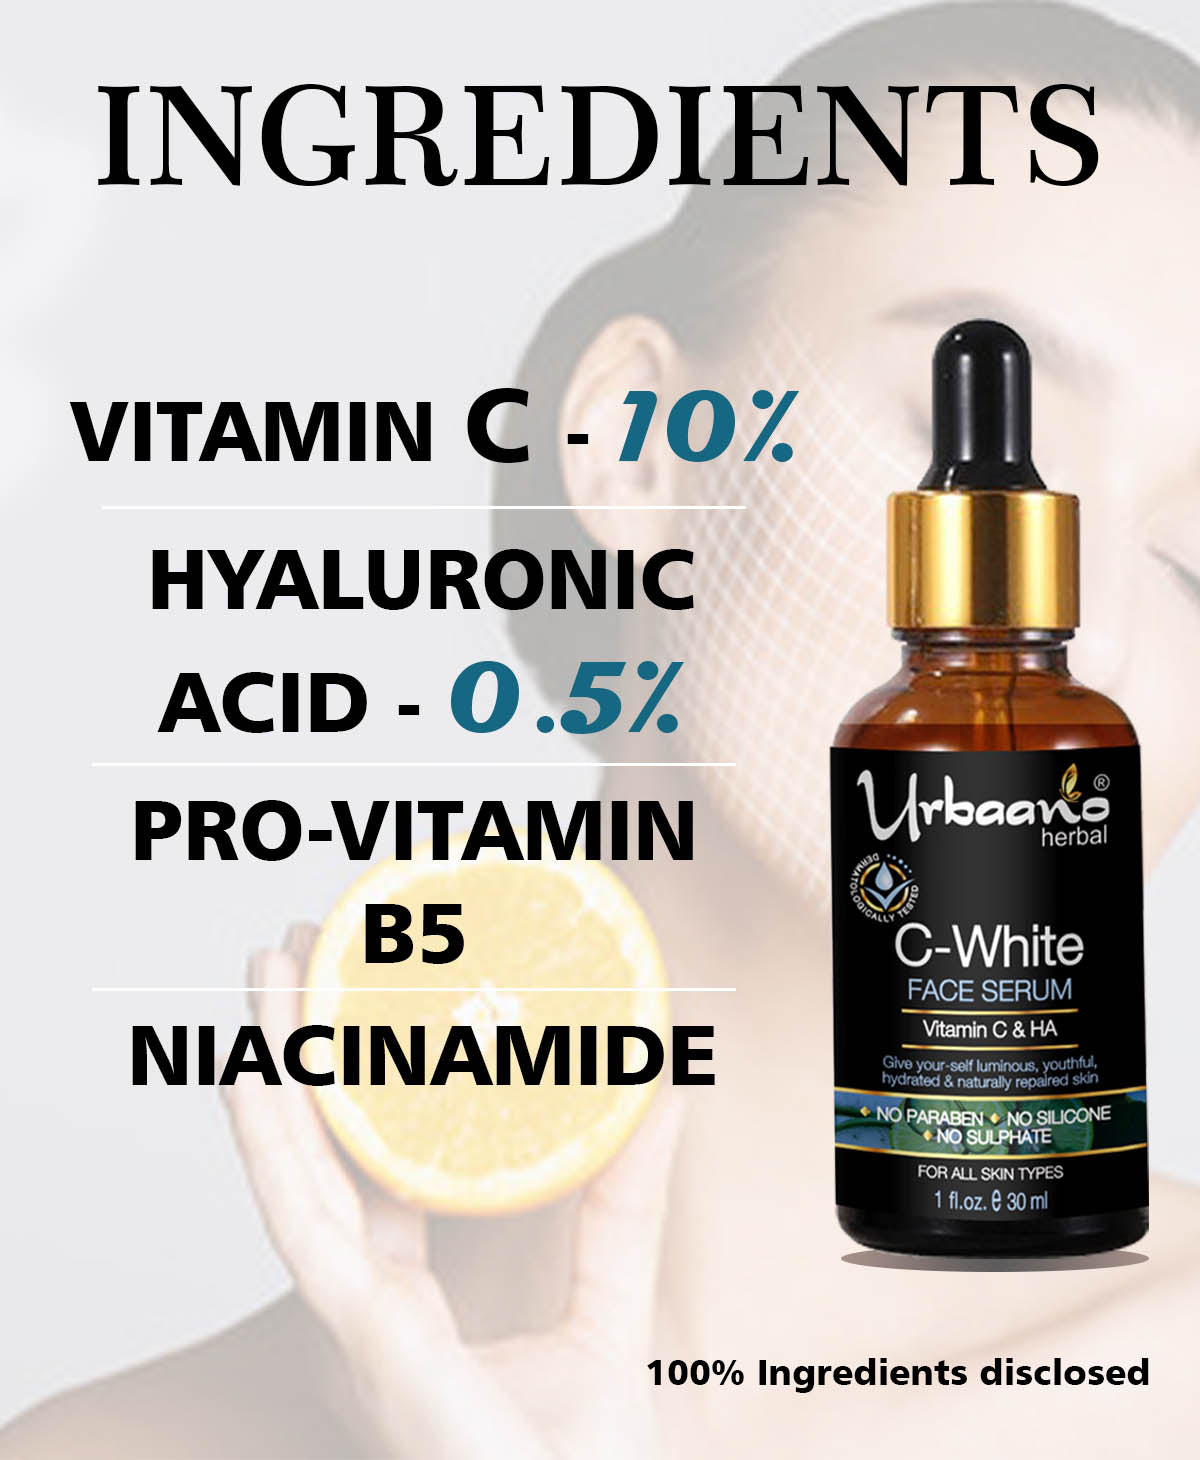 urbaano herbal vitamin c skin care kit, face serum, face cream with niacinamide, hyaluronic acid, vtamin B5 for brightening, firming agleless oil free skin